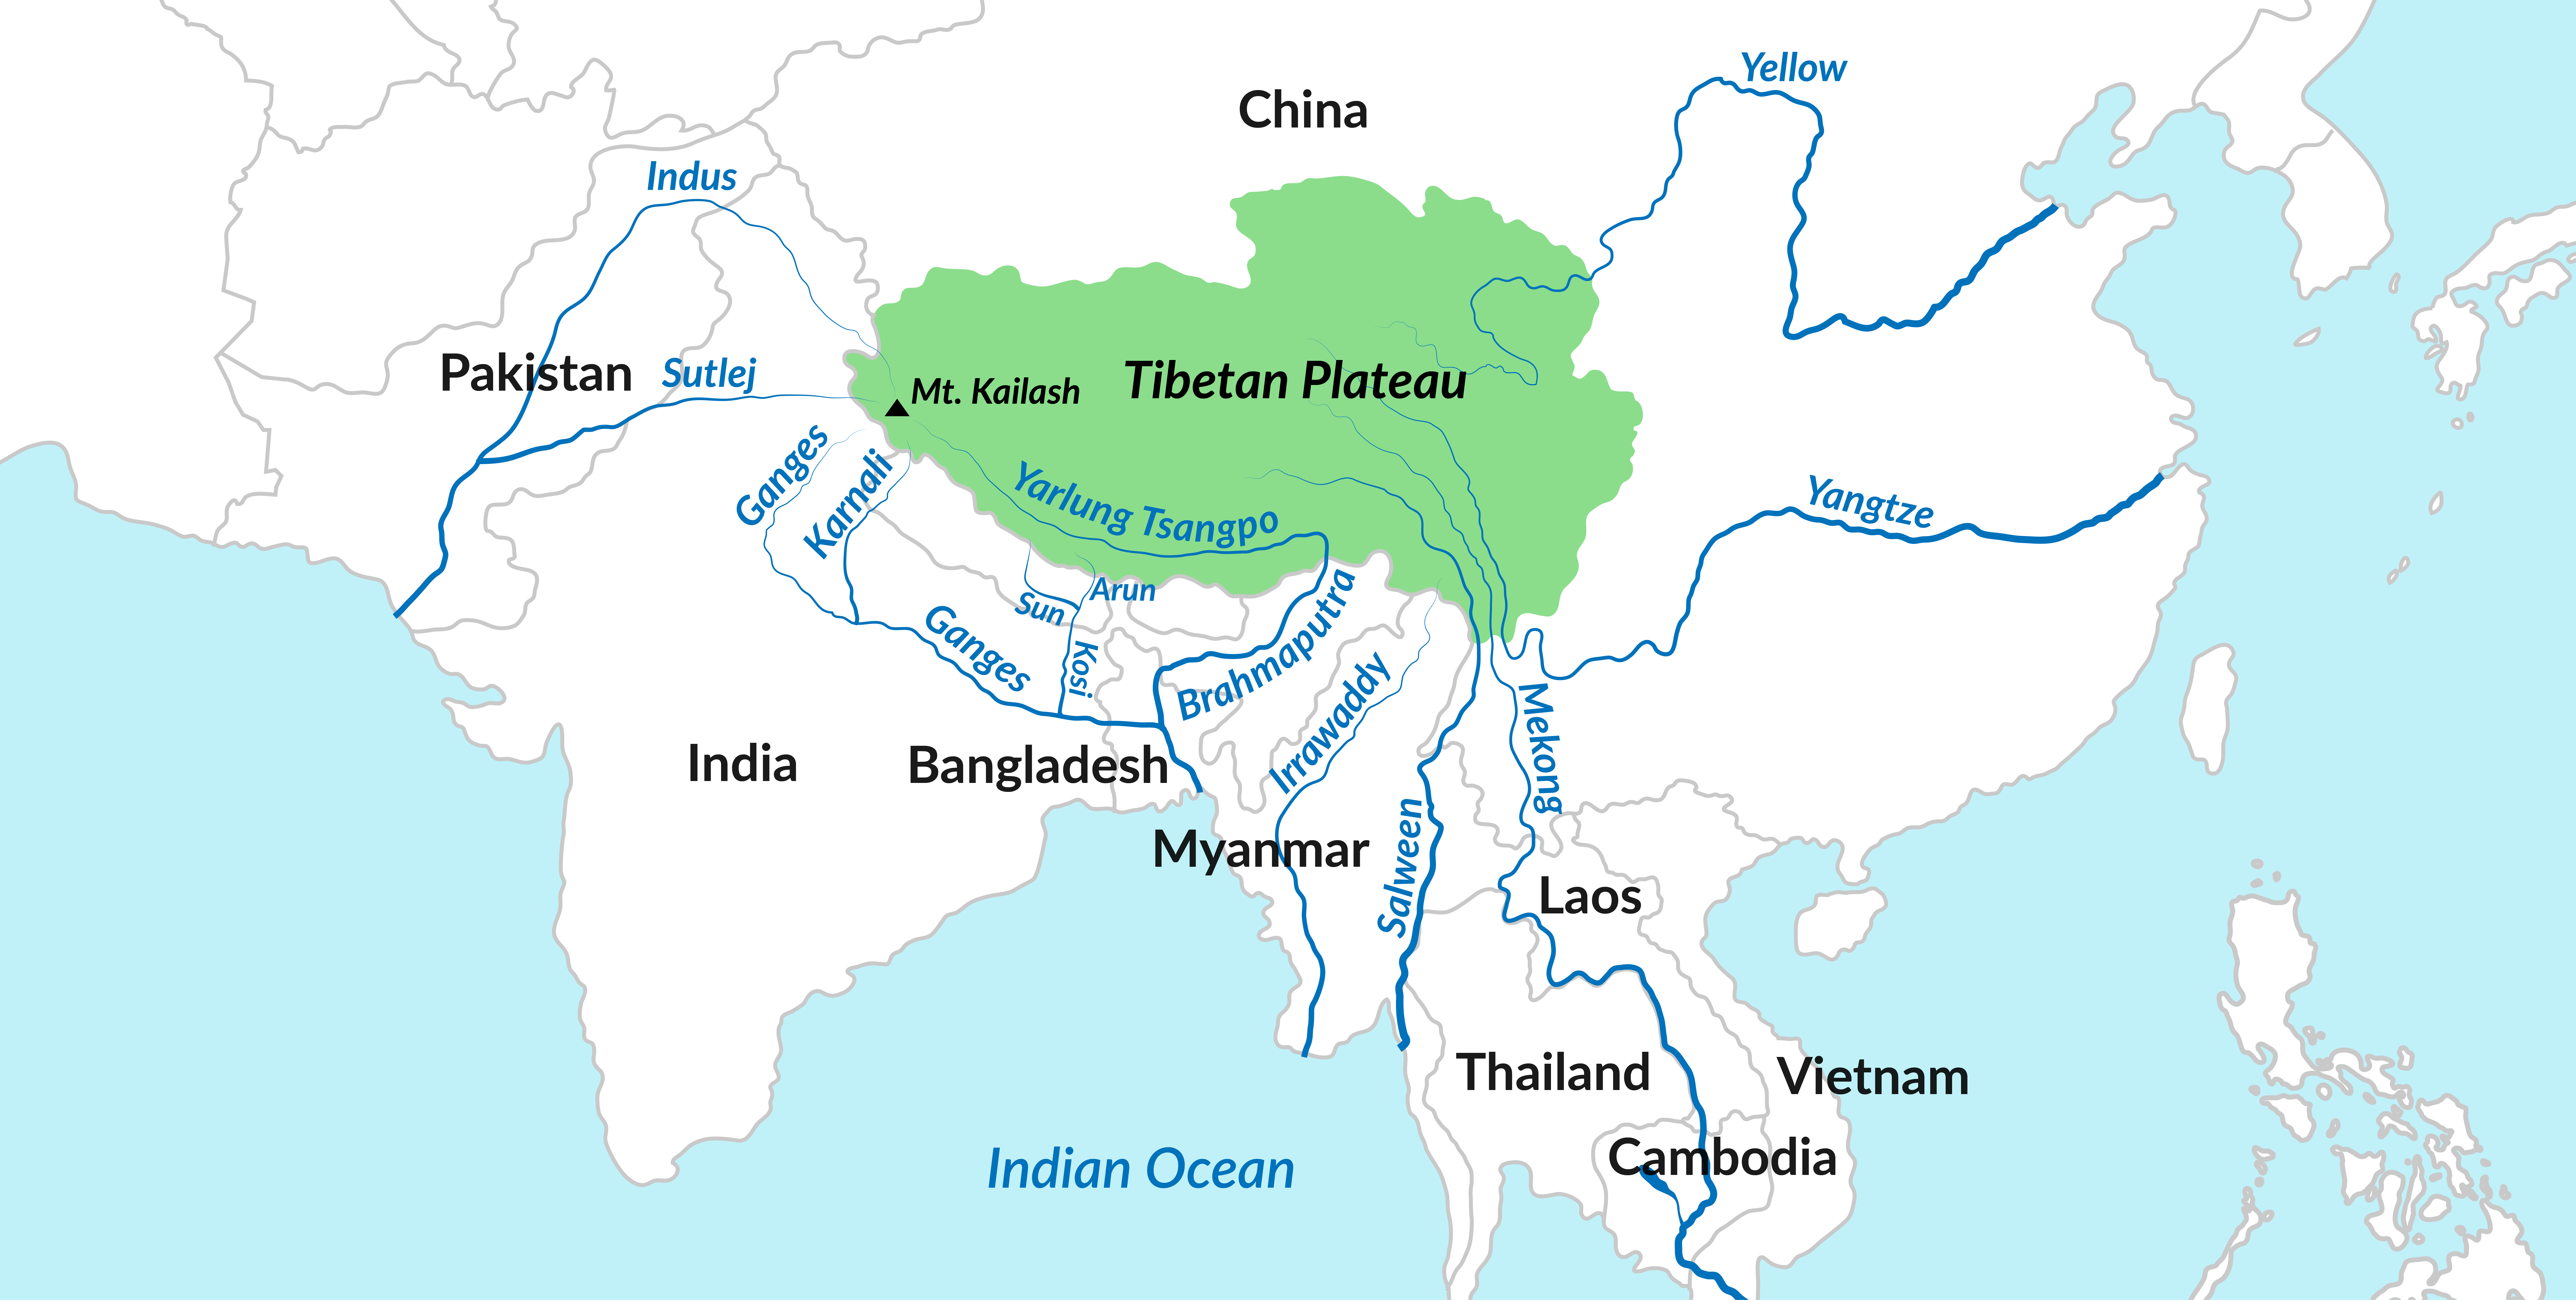 Салуин река на карте. Река Меконг на карте. Брахмапутра на карте Китая. Река Меконг Тибет. Четырехугольник на контурной карте река ганг